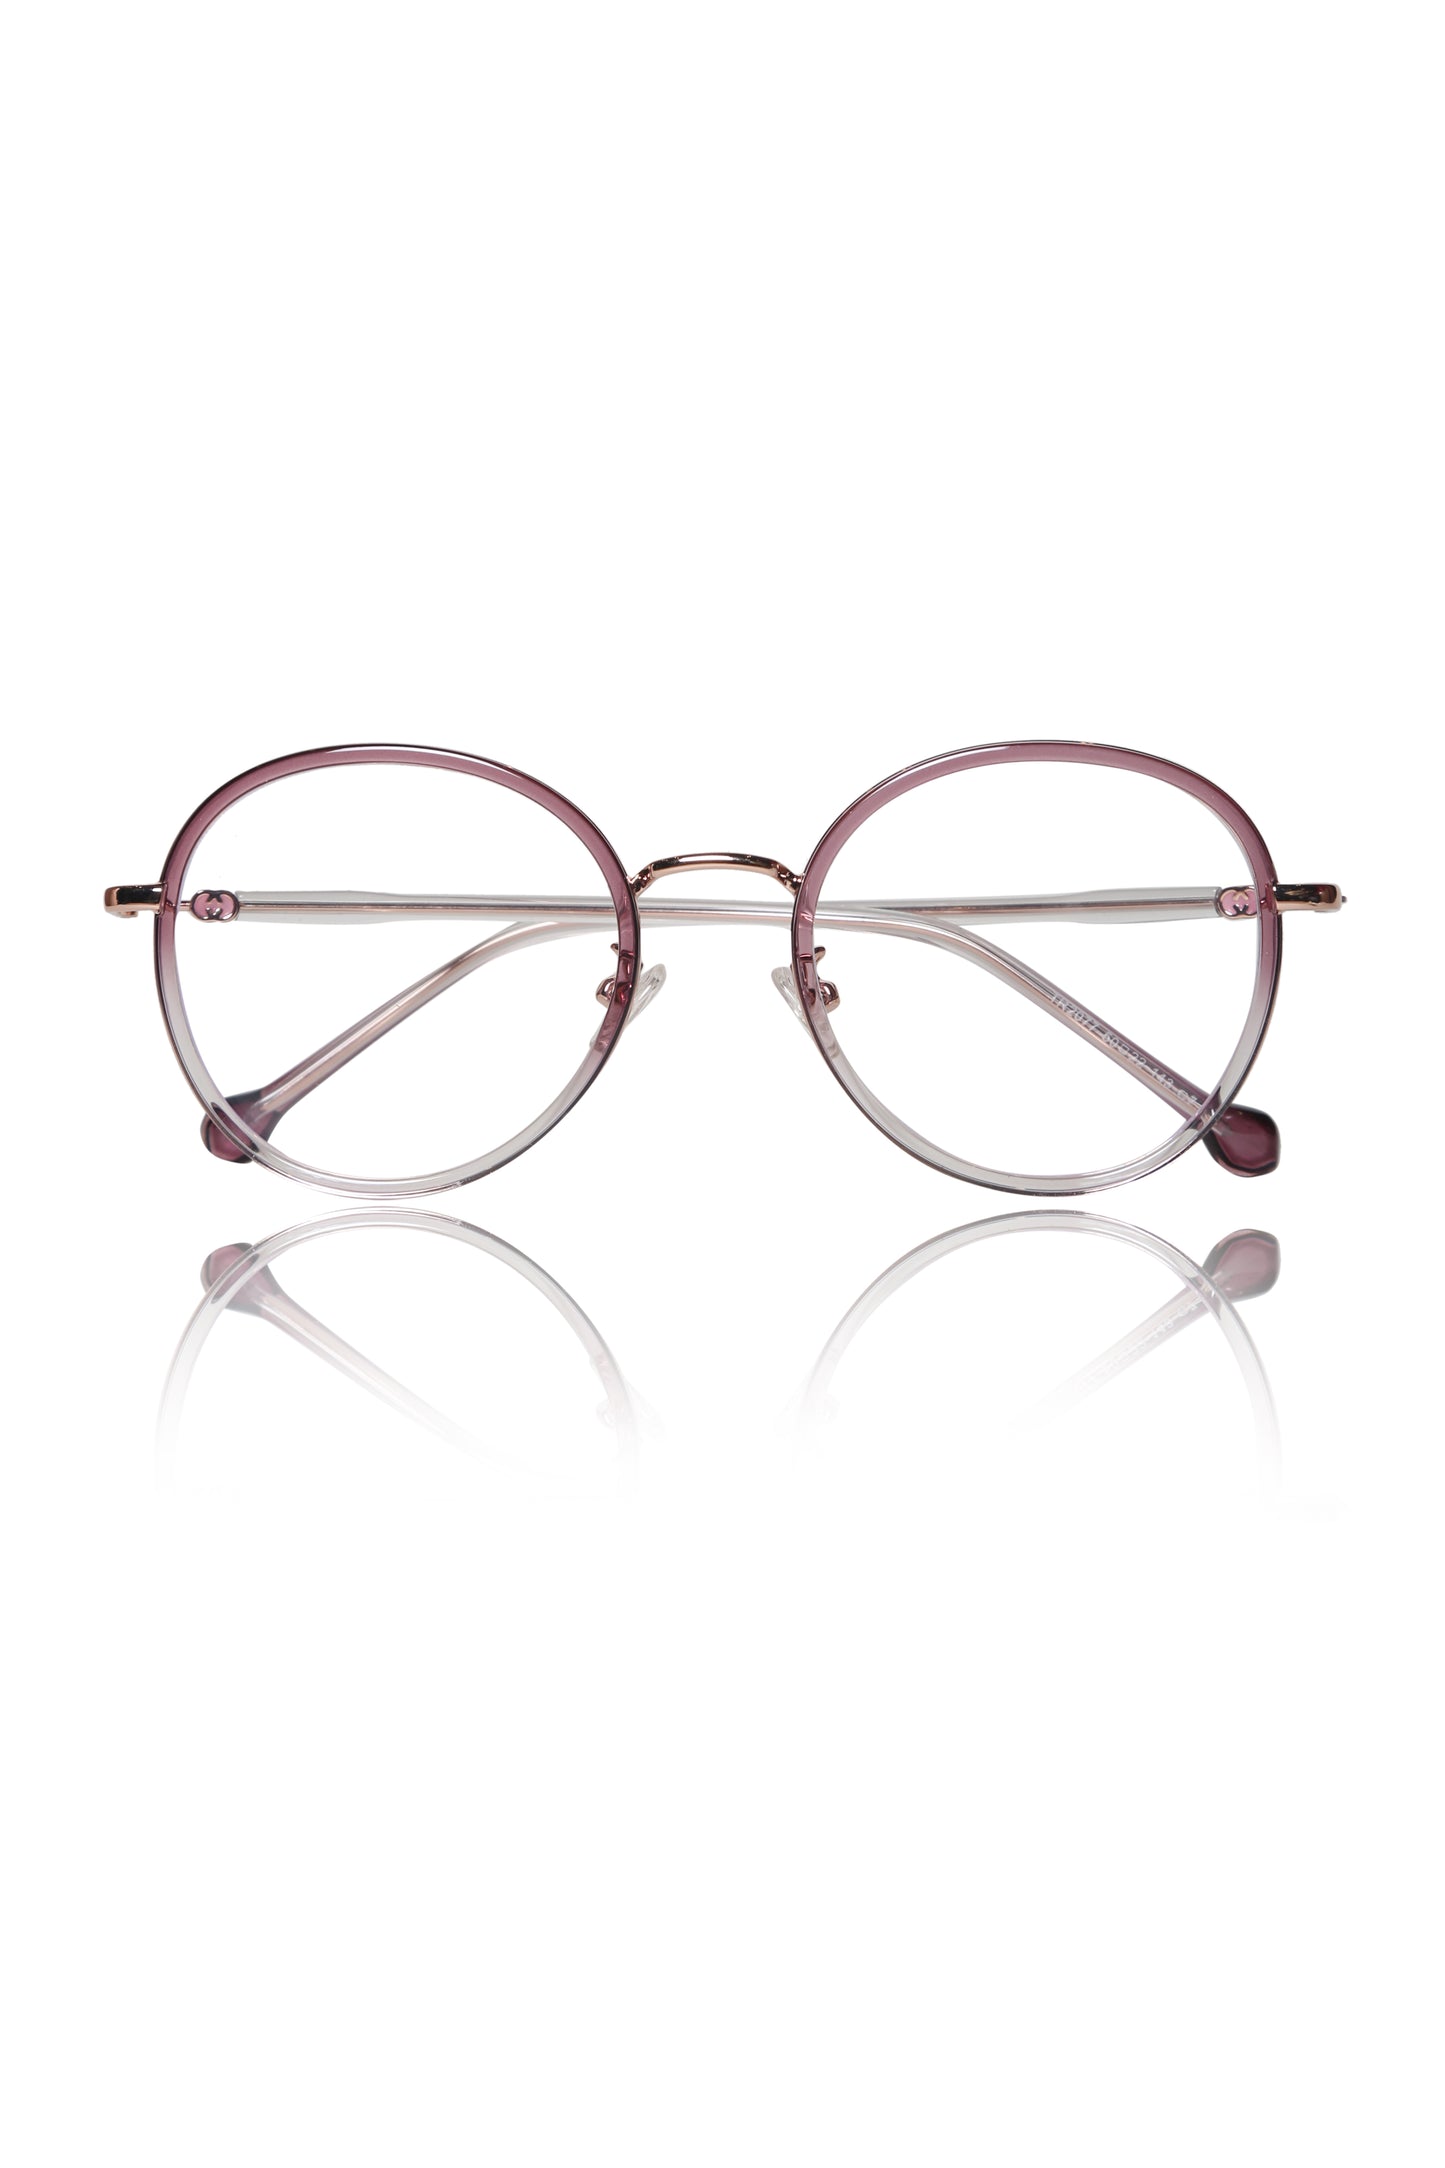 Jodykoes® Premium Series Round Eyewear Eyeglasses Spectacles Frame for Men and Women (Rose)